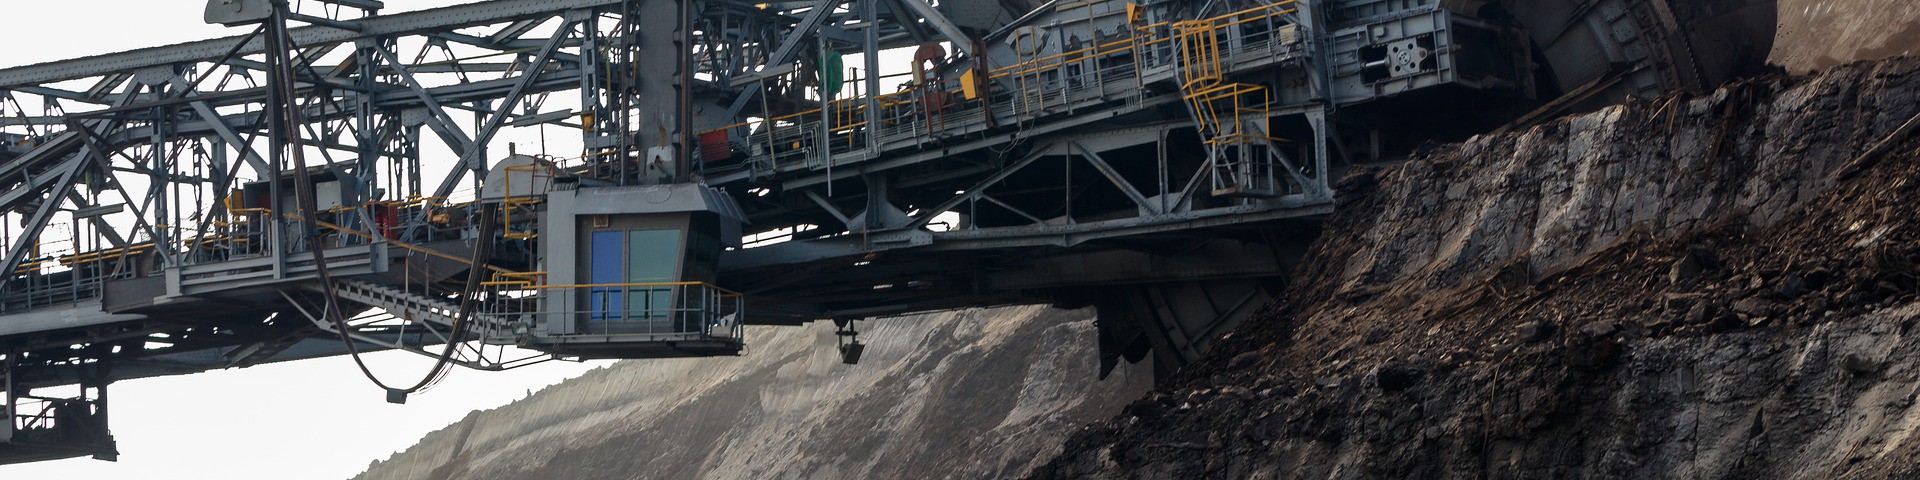 Russland setzt auf Kohlebergbau